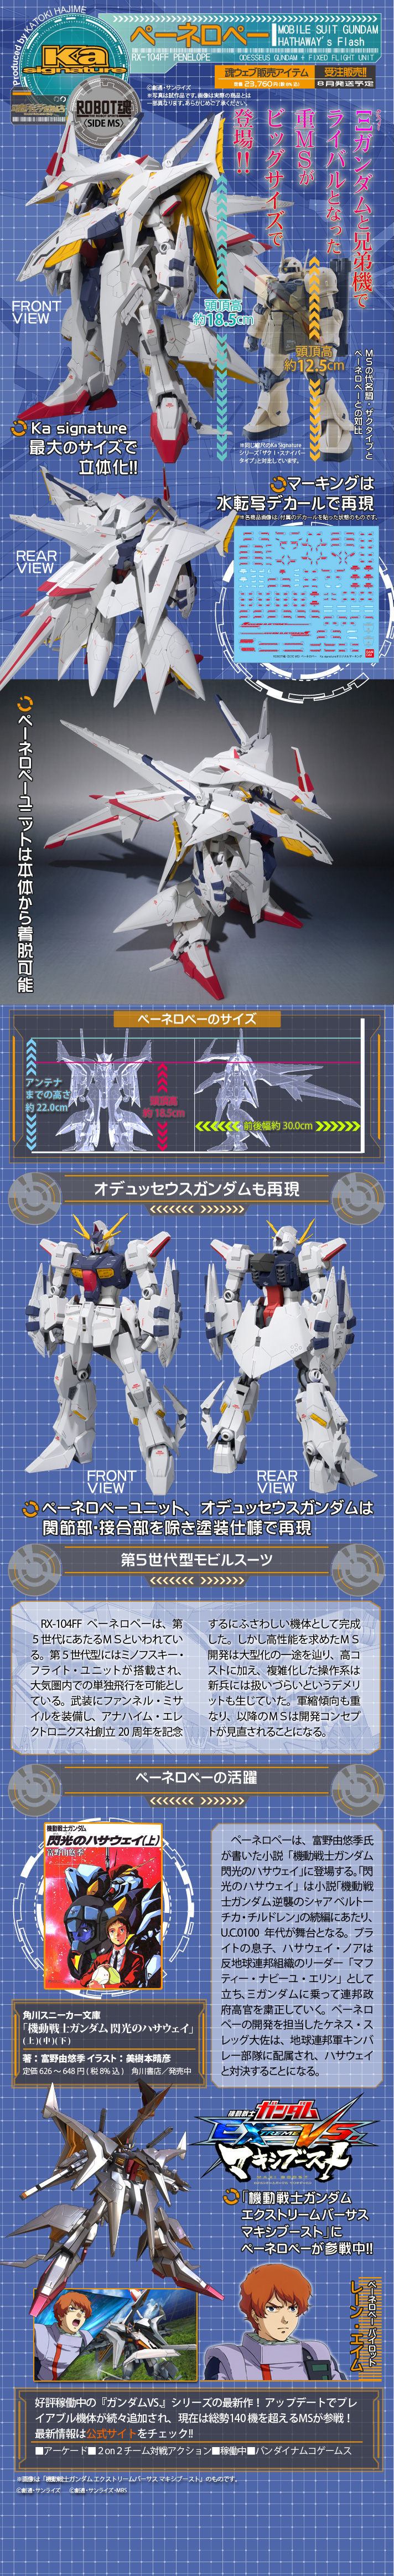 Robot Spirits[Ka Signature](Side MS) RX-104FF Penelope(Odysseus Gundam+Fixed Flight Unit)